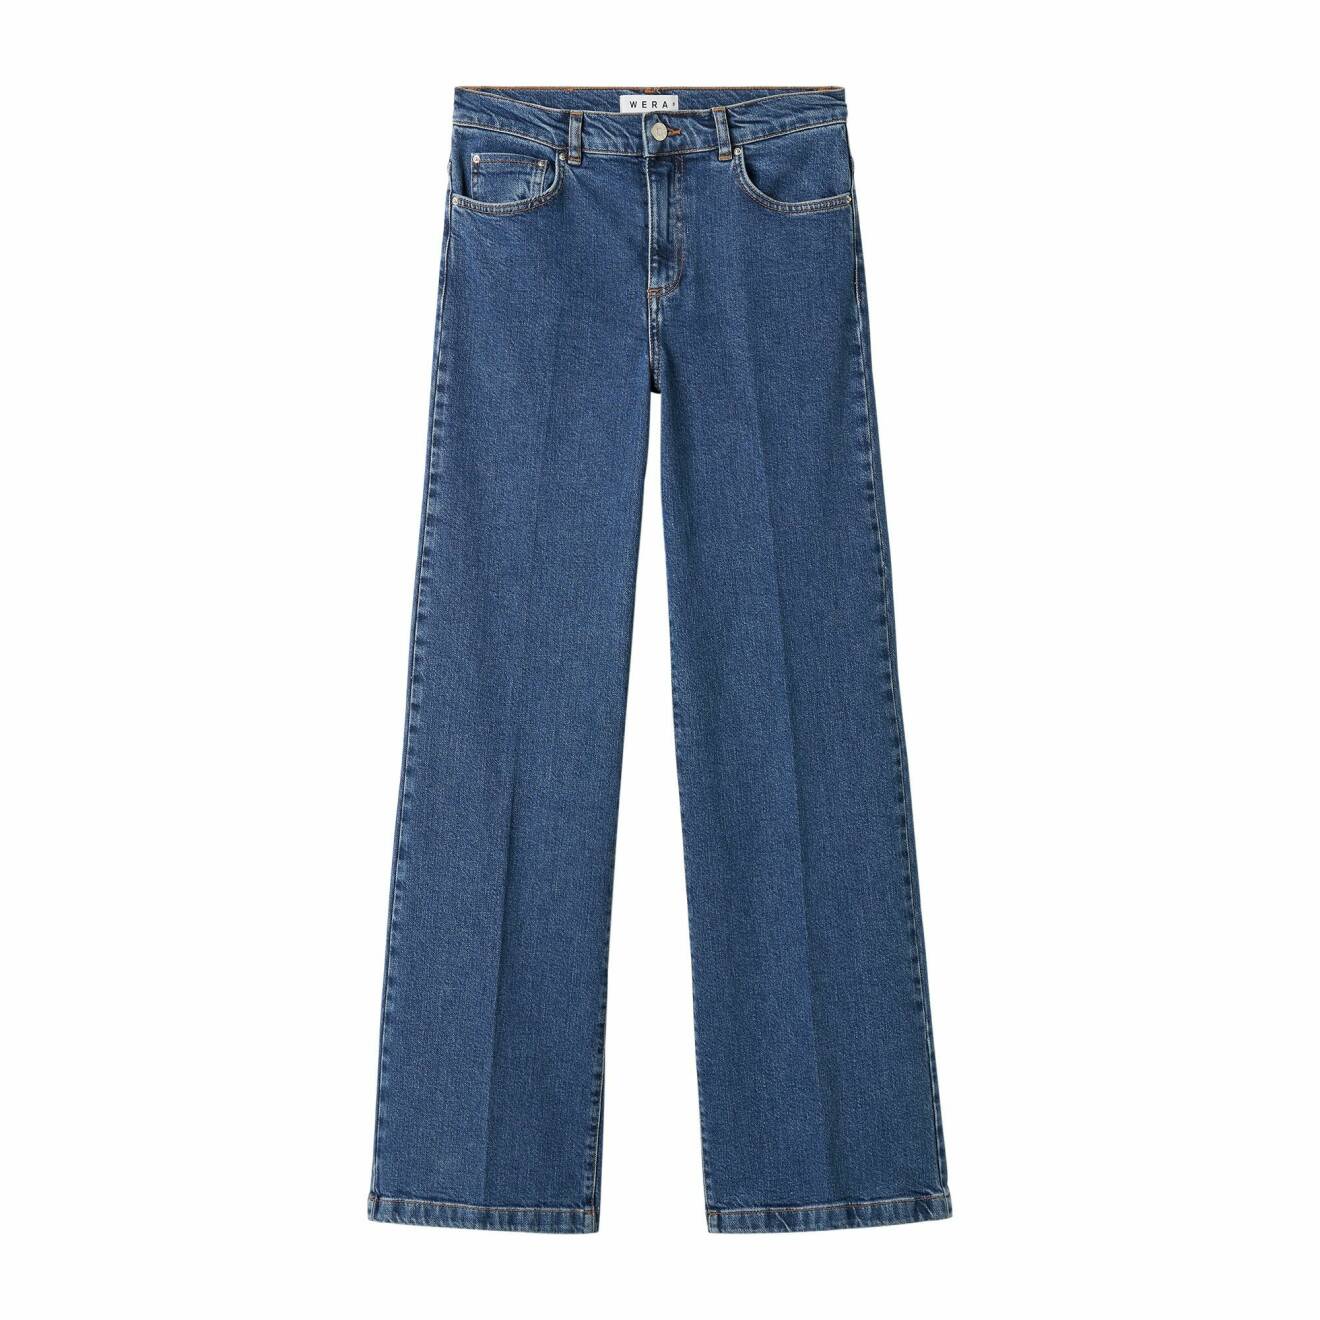 raka jeans höst 2021